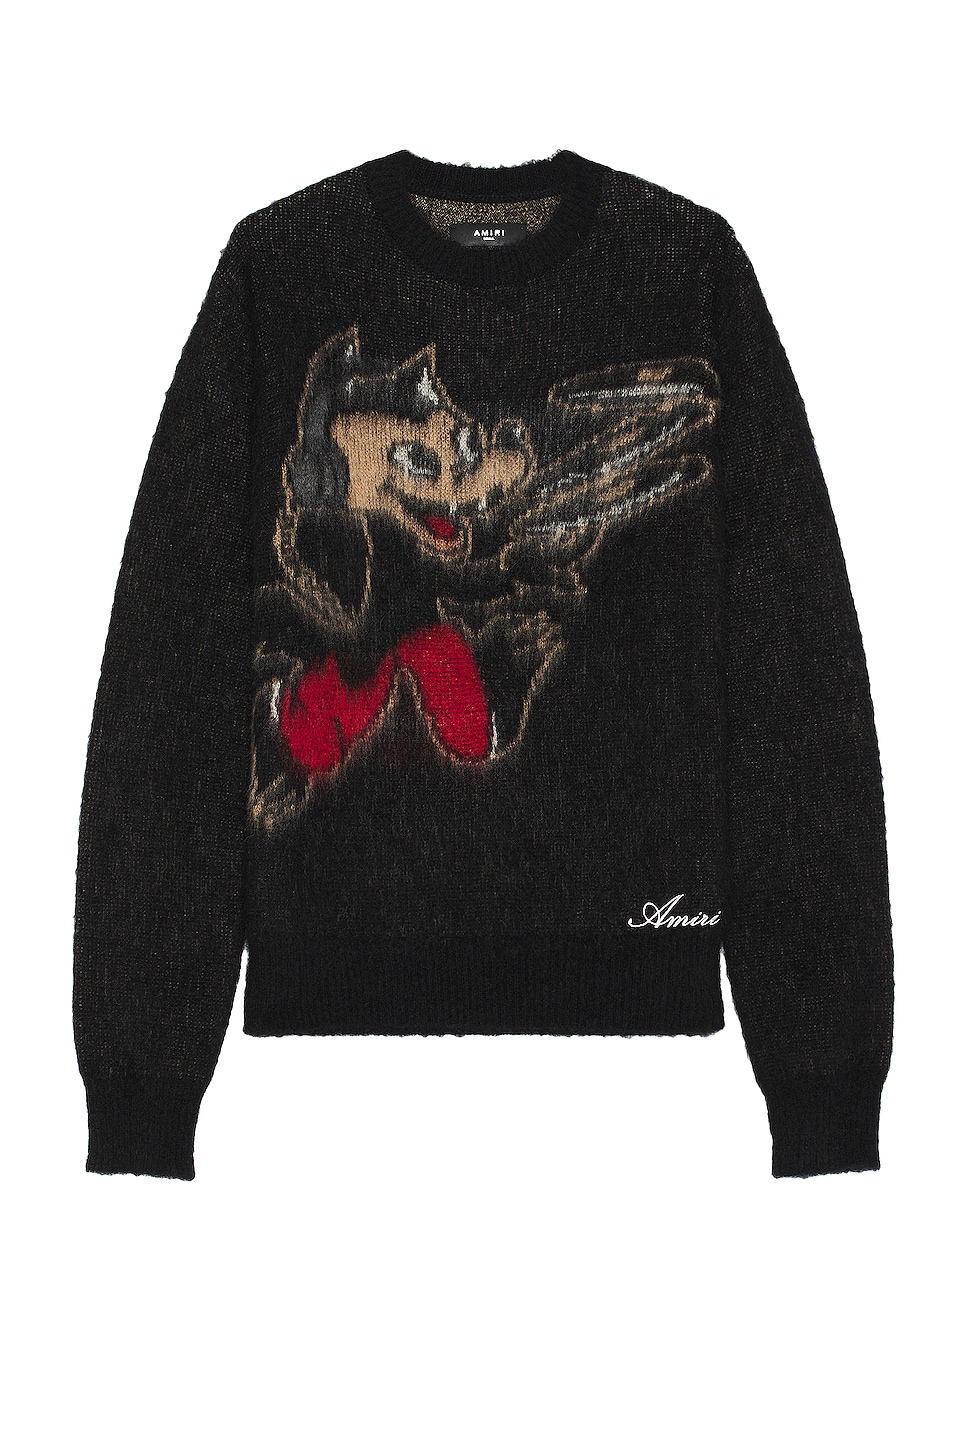 Amiri Record Wolf Sweater in Black | FWRD